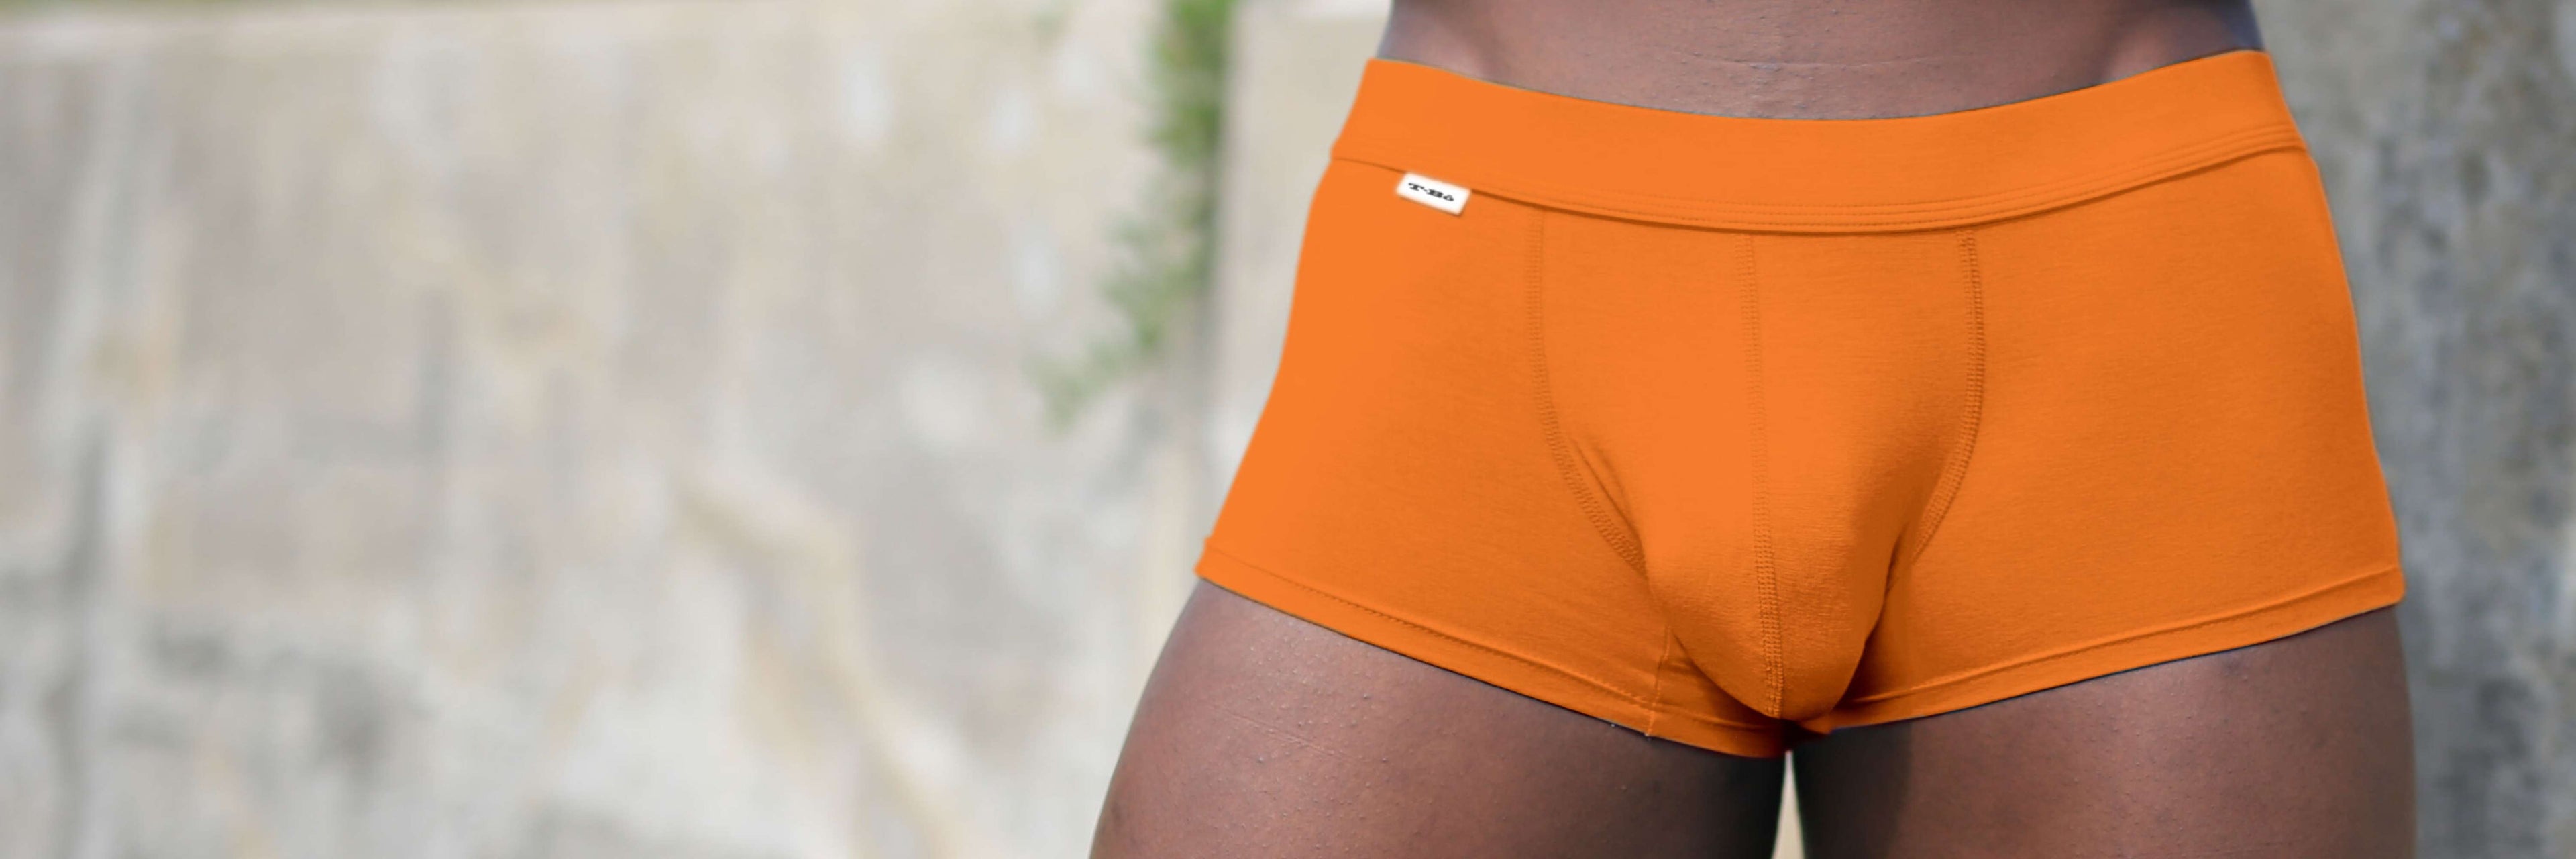 bulge enhancing underwear